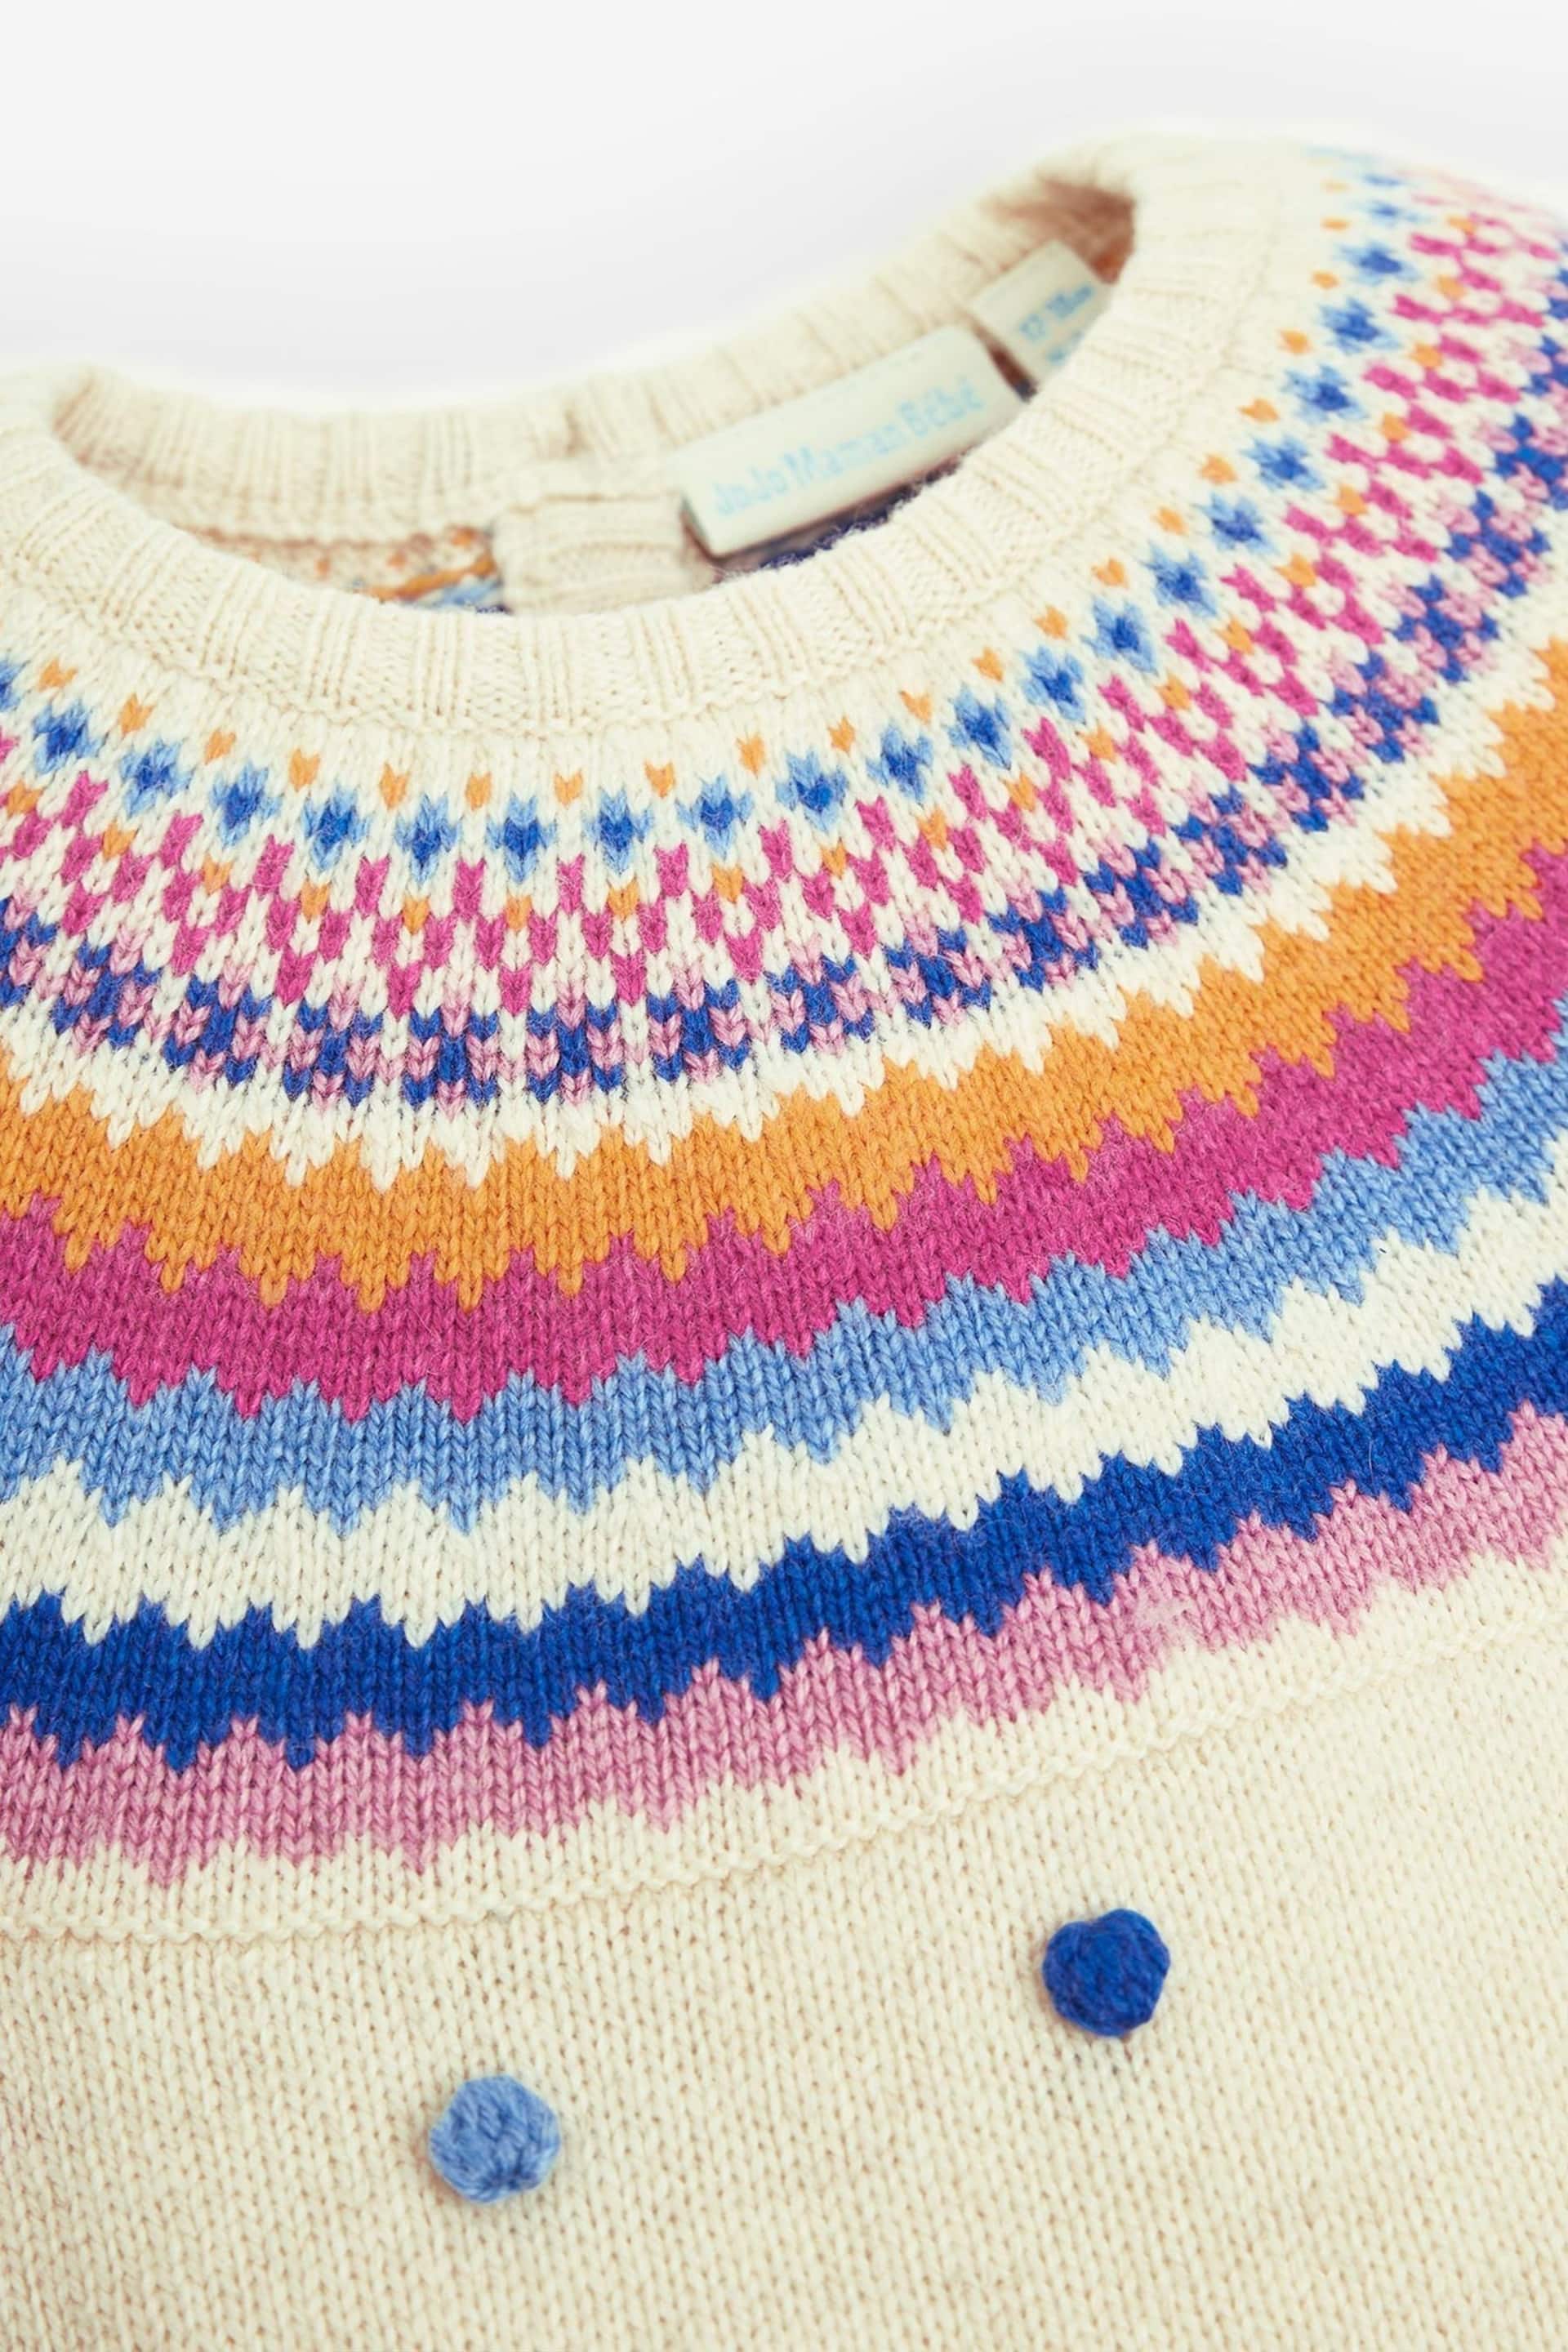 JoJo Maman Bébé Cream Bright Stripe Knitted Jumper Dress - Image 3 of 3